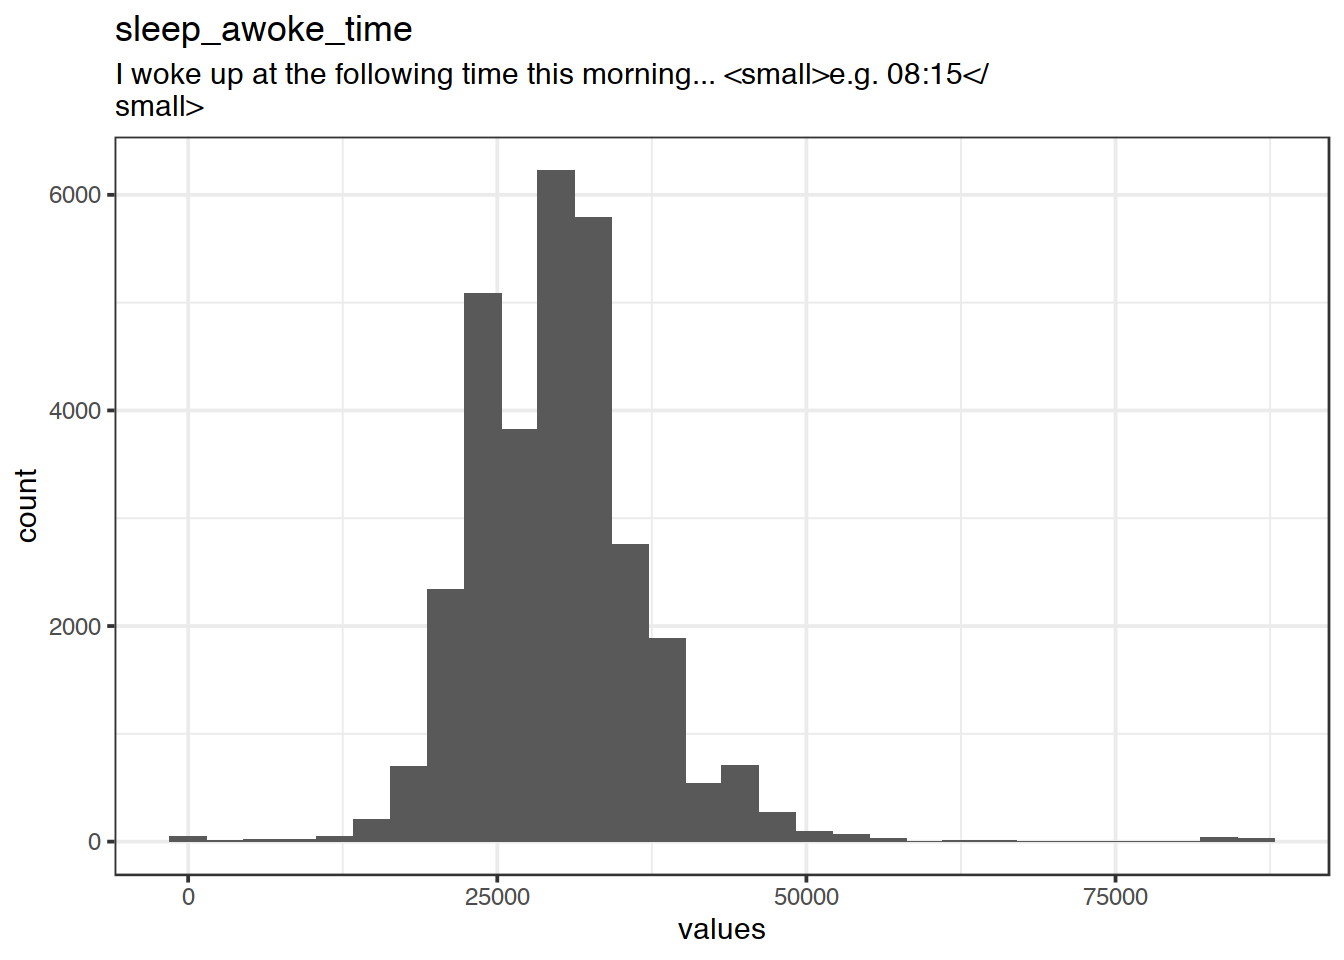 Distribution of values for sleep_awoke_time